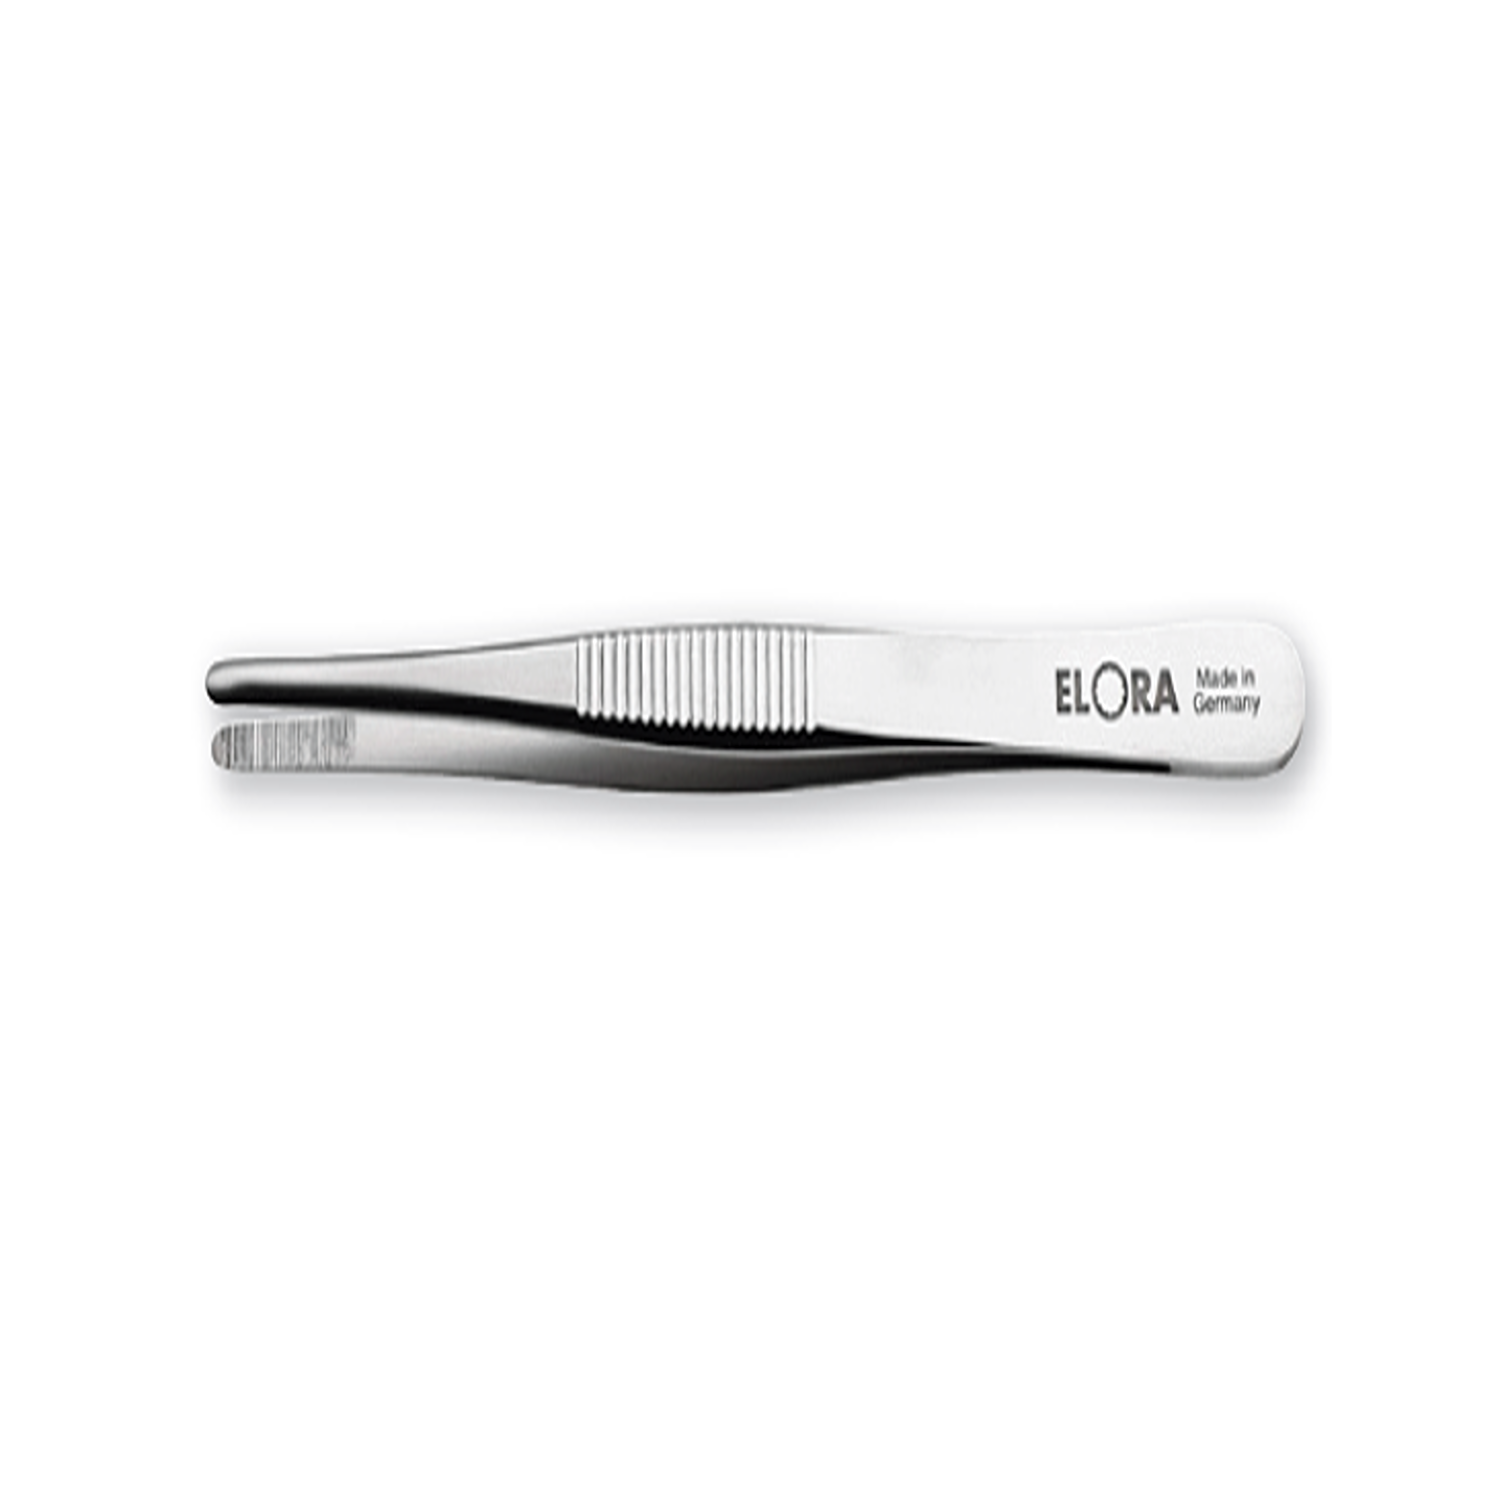 ELORA 5360-ST Universal Tweezer (ELORA Tools) - Premium Universal Tweezer from ELORA - Shop now at Yew Aik.